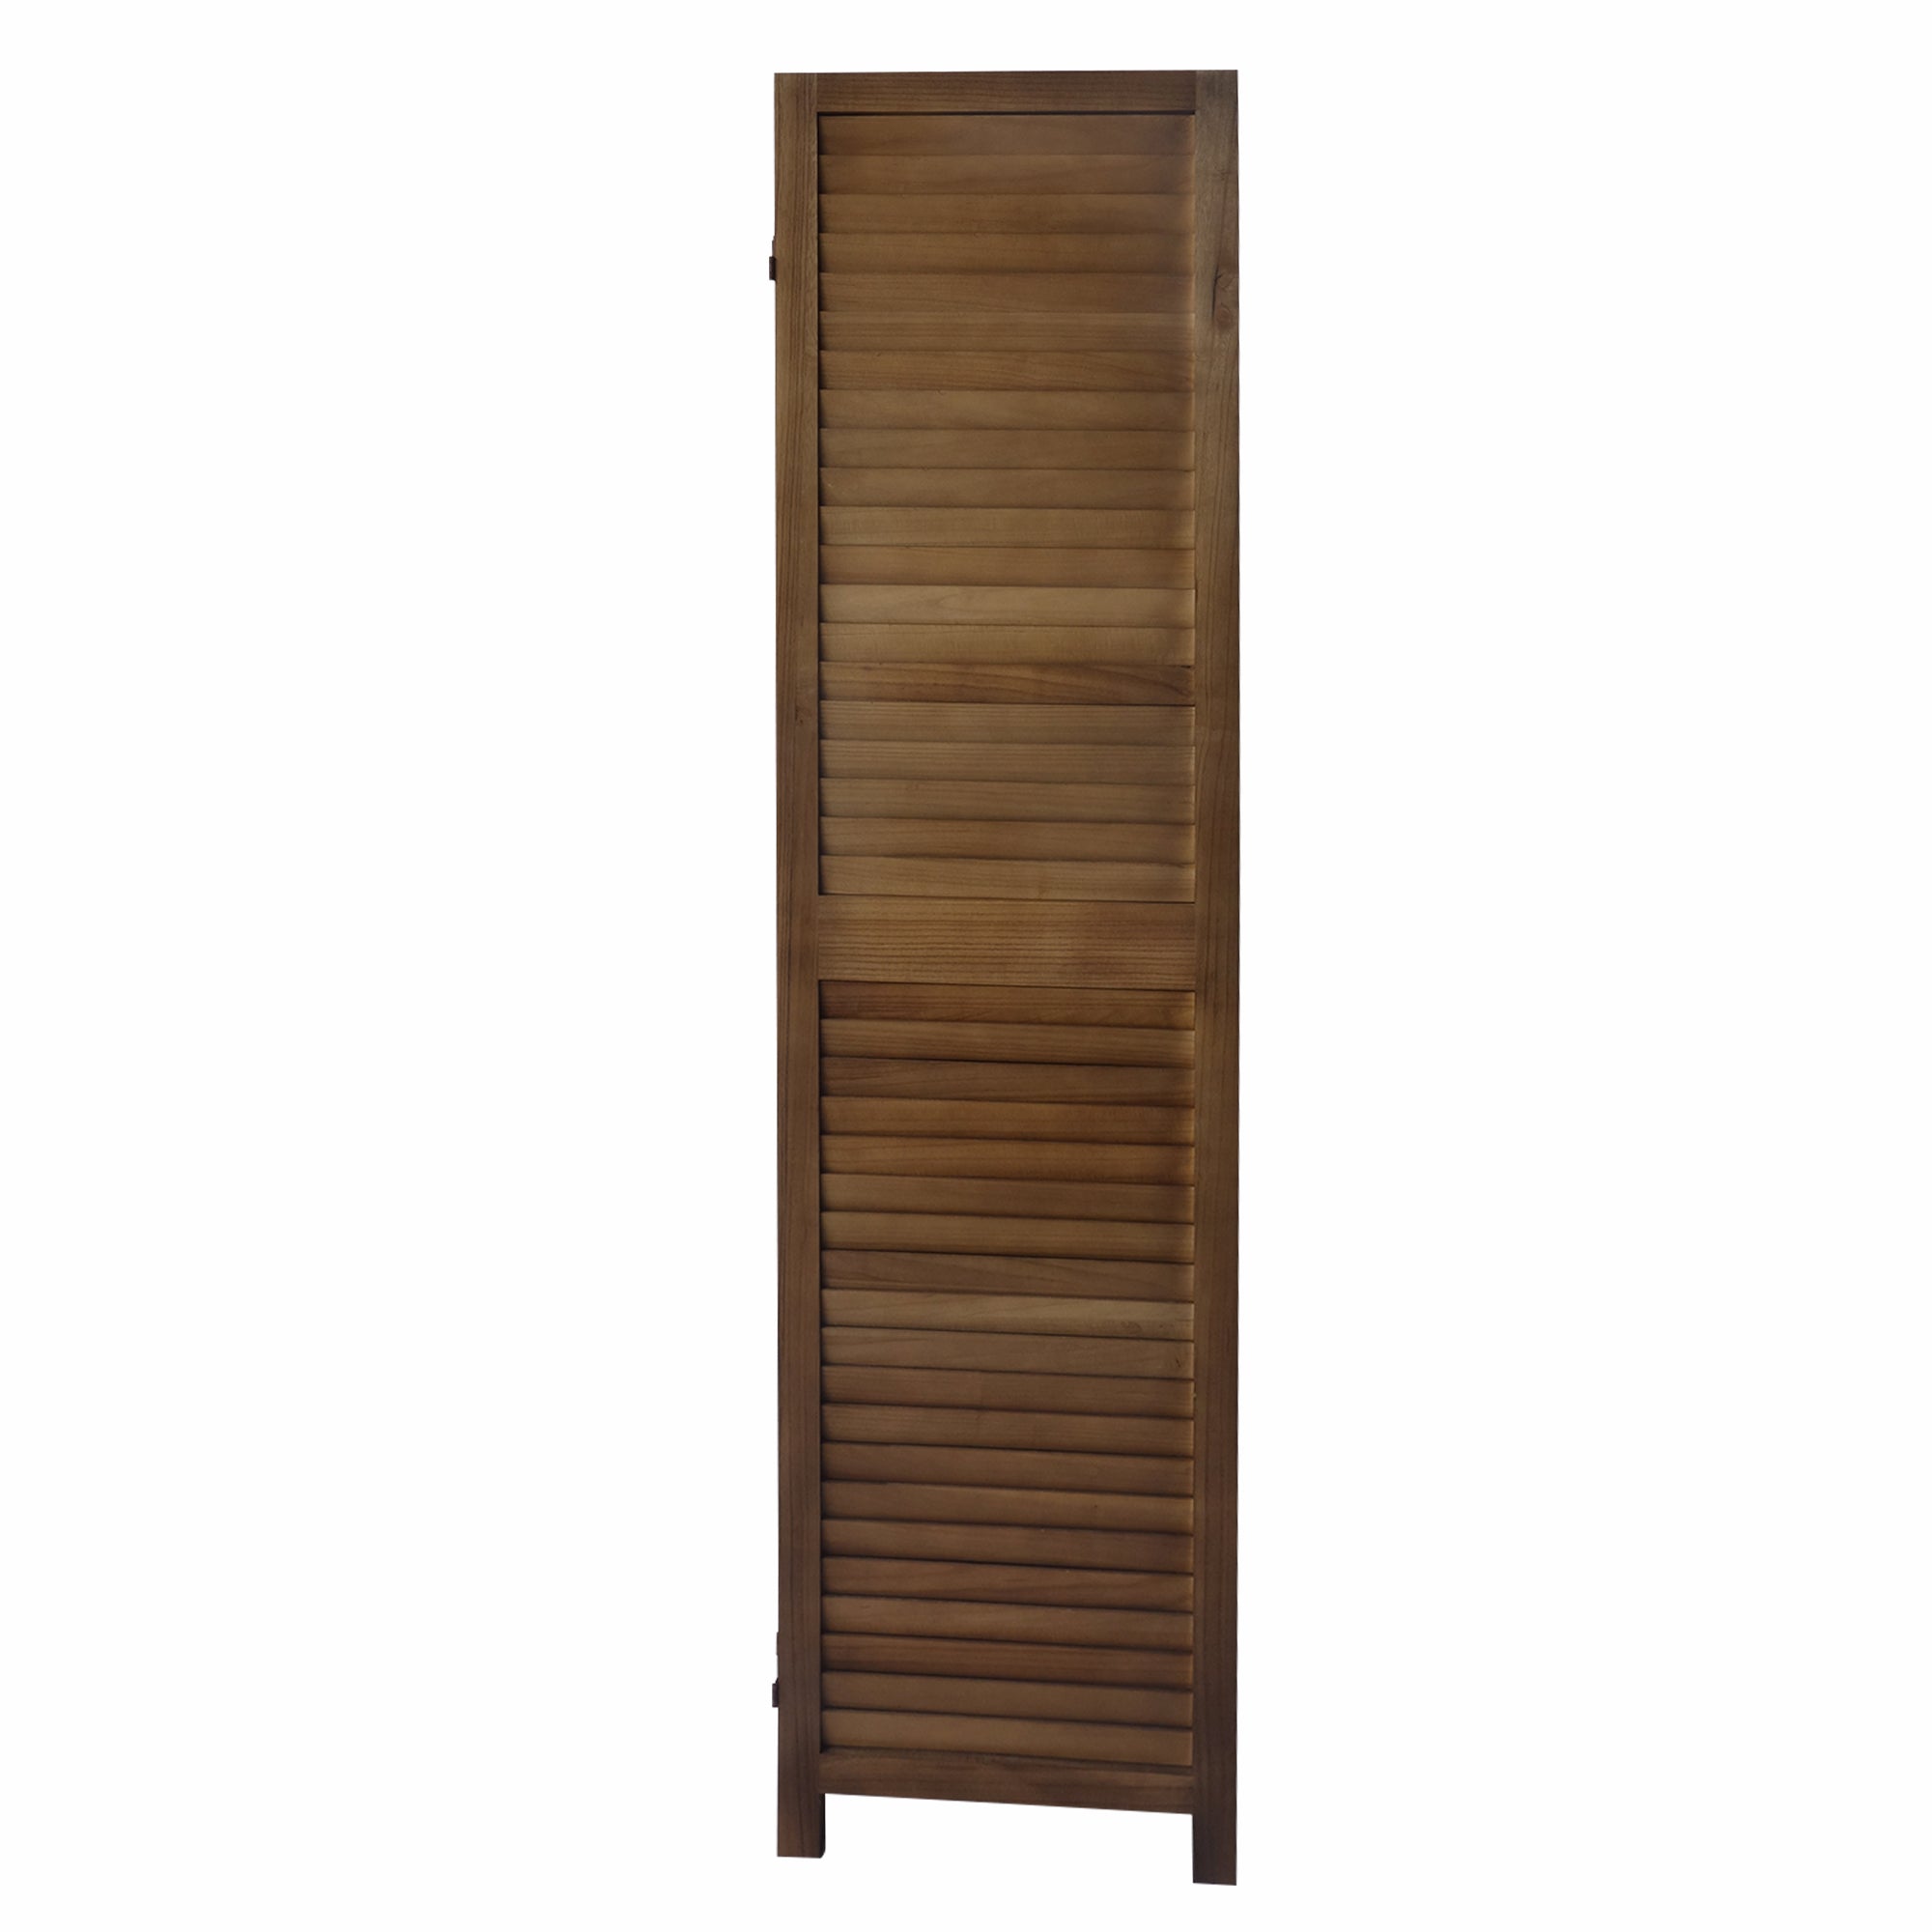 Paulownia Wood Panel Divider Screen, Shutter Design, 3 Panels - Natural Oak Brown